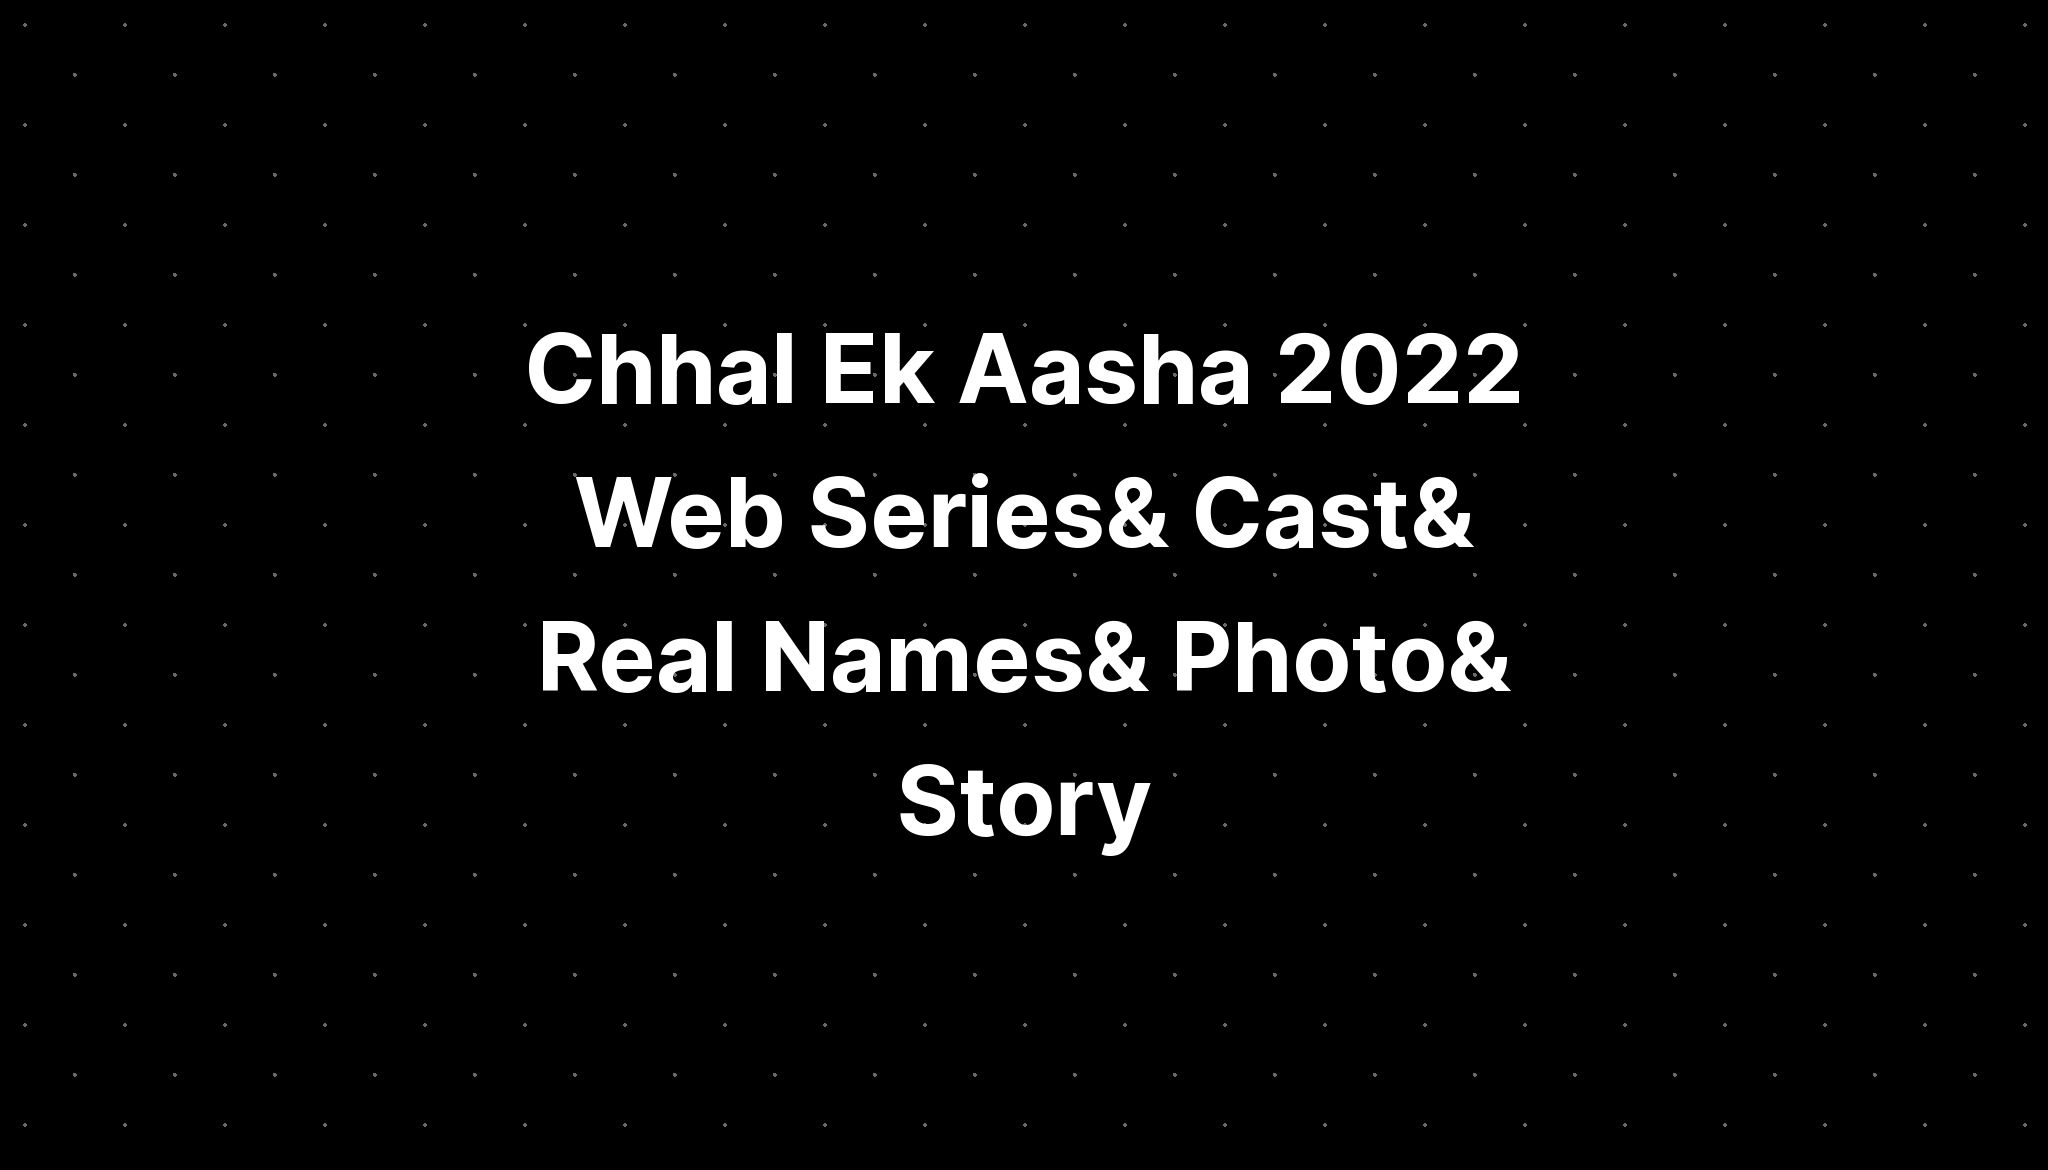 Chhal Ek Aasha TriFlicks Web series Wiki, Cast Real Name, Photo, Salary and News